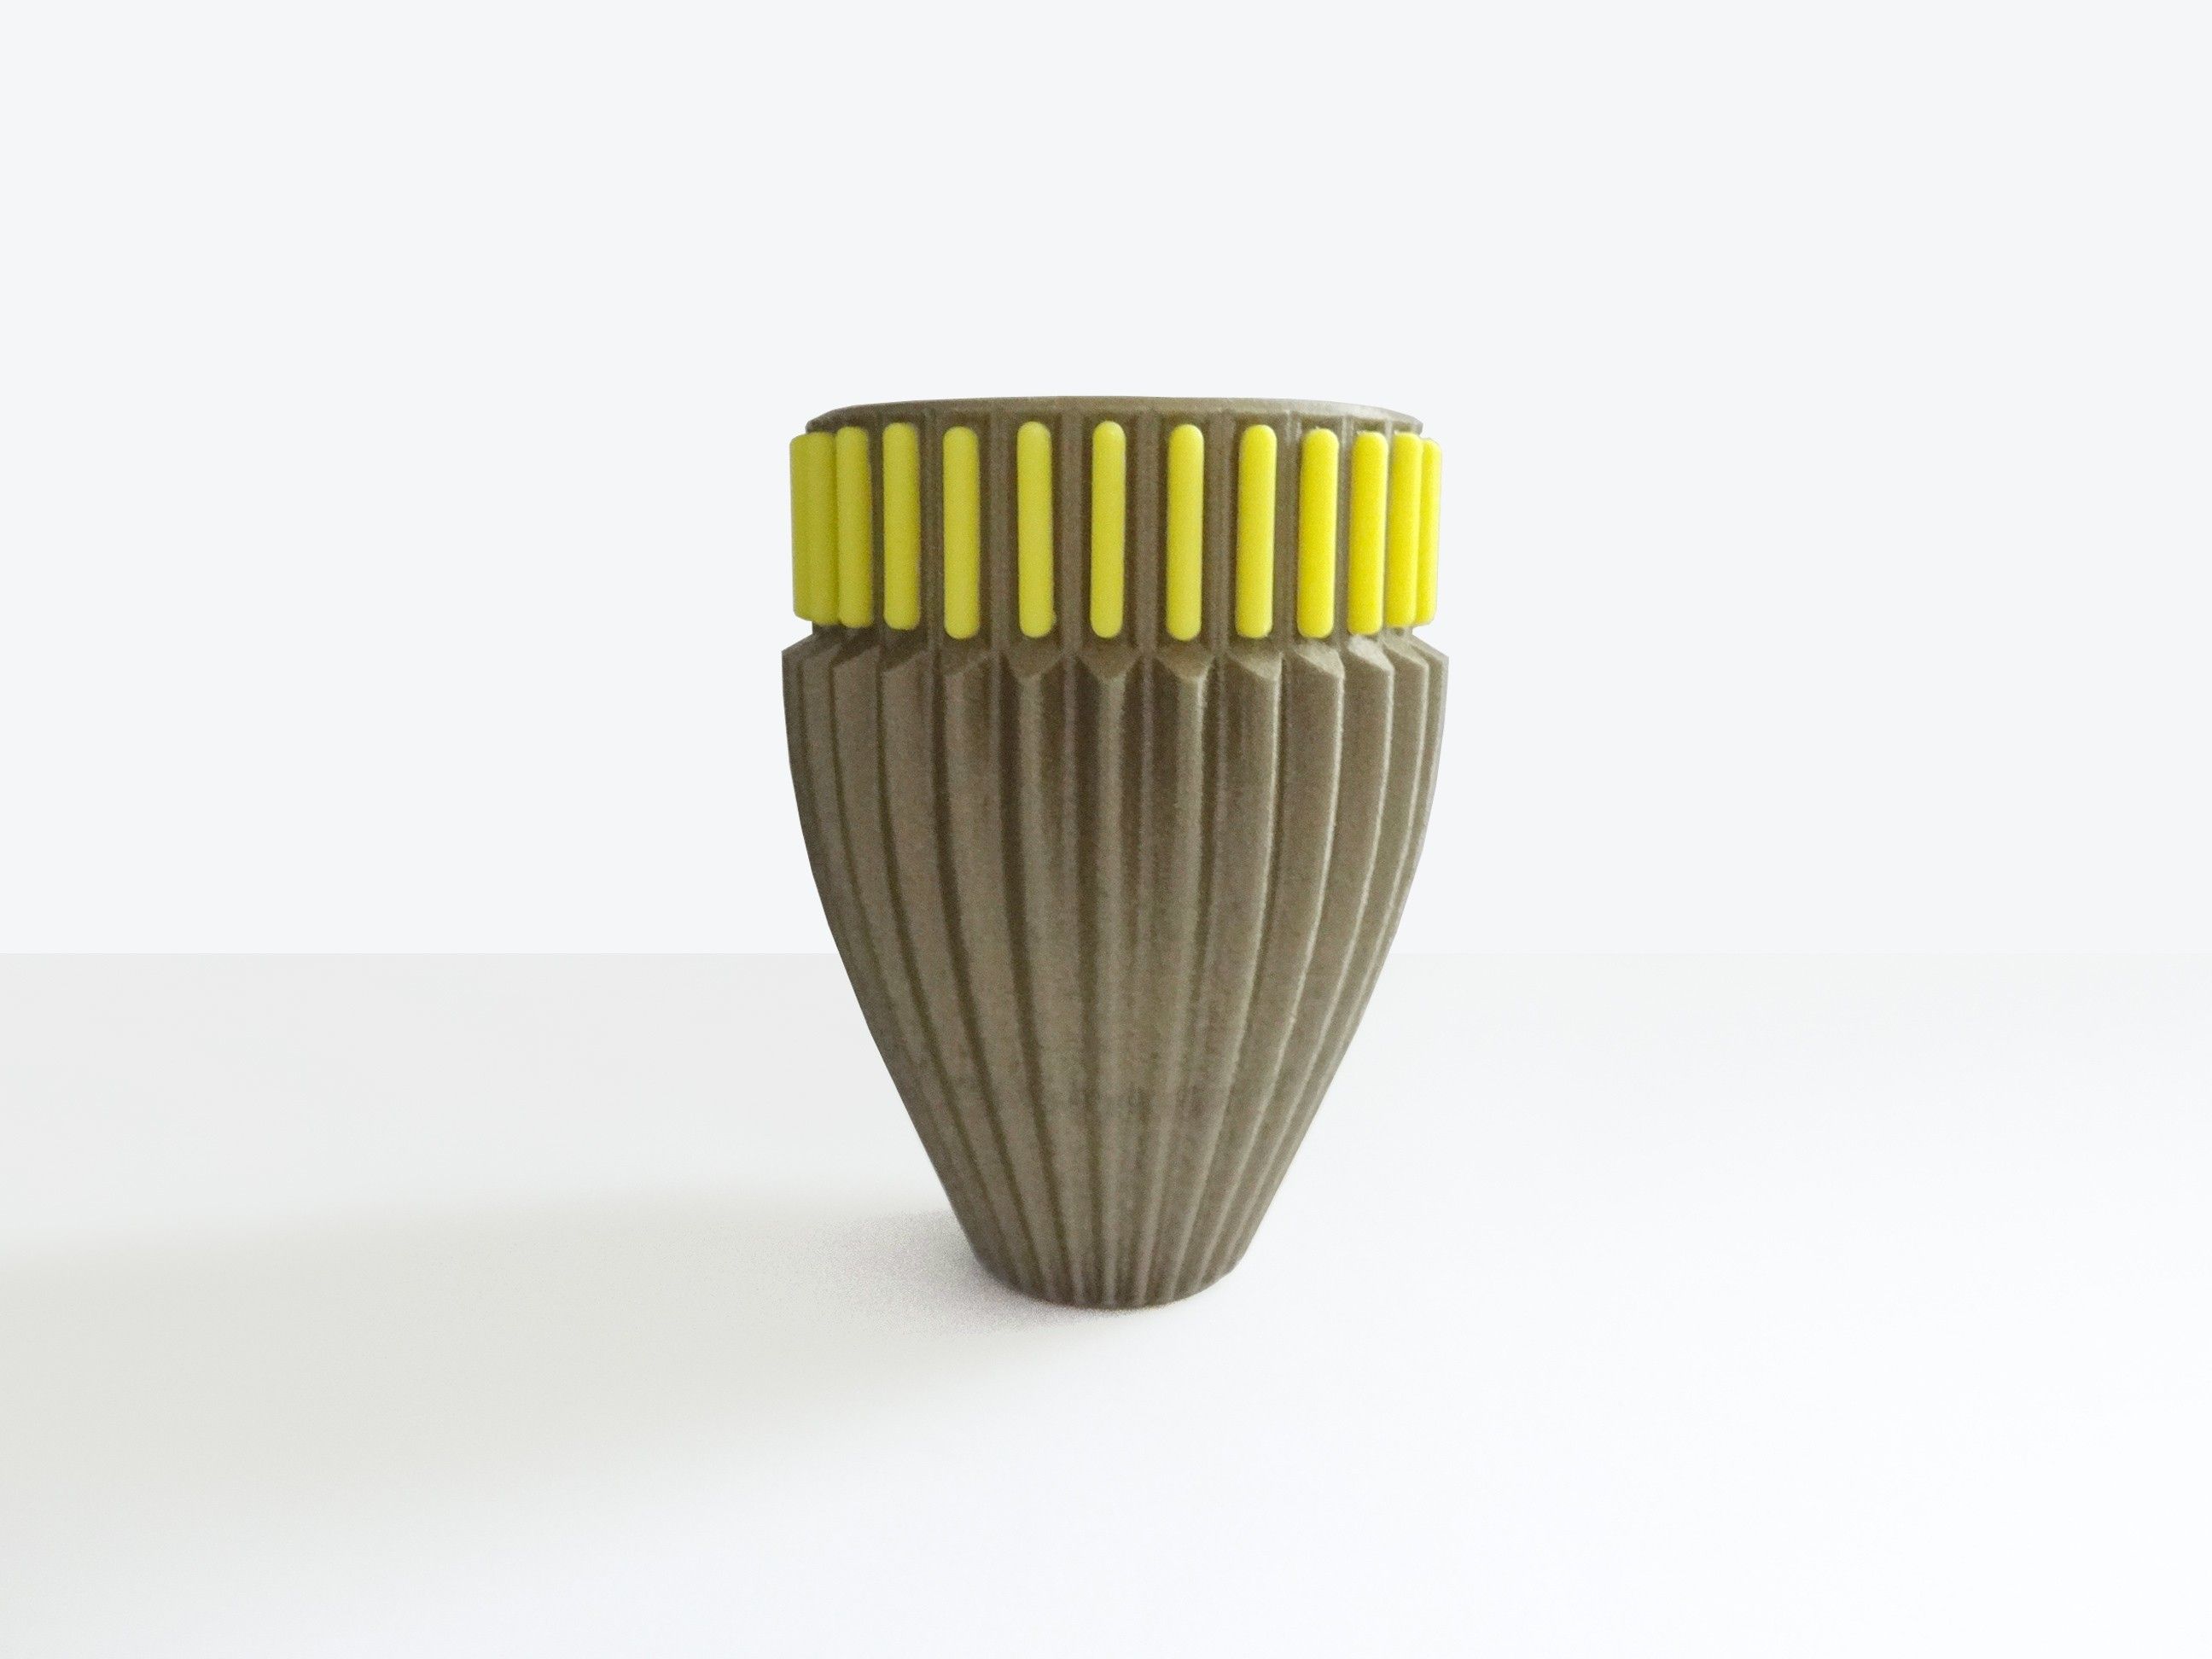 vase_topale_v1-01.jpg Download STL file Topal Vase V.1 • 3D print design, Tibe-Design